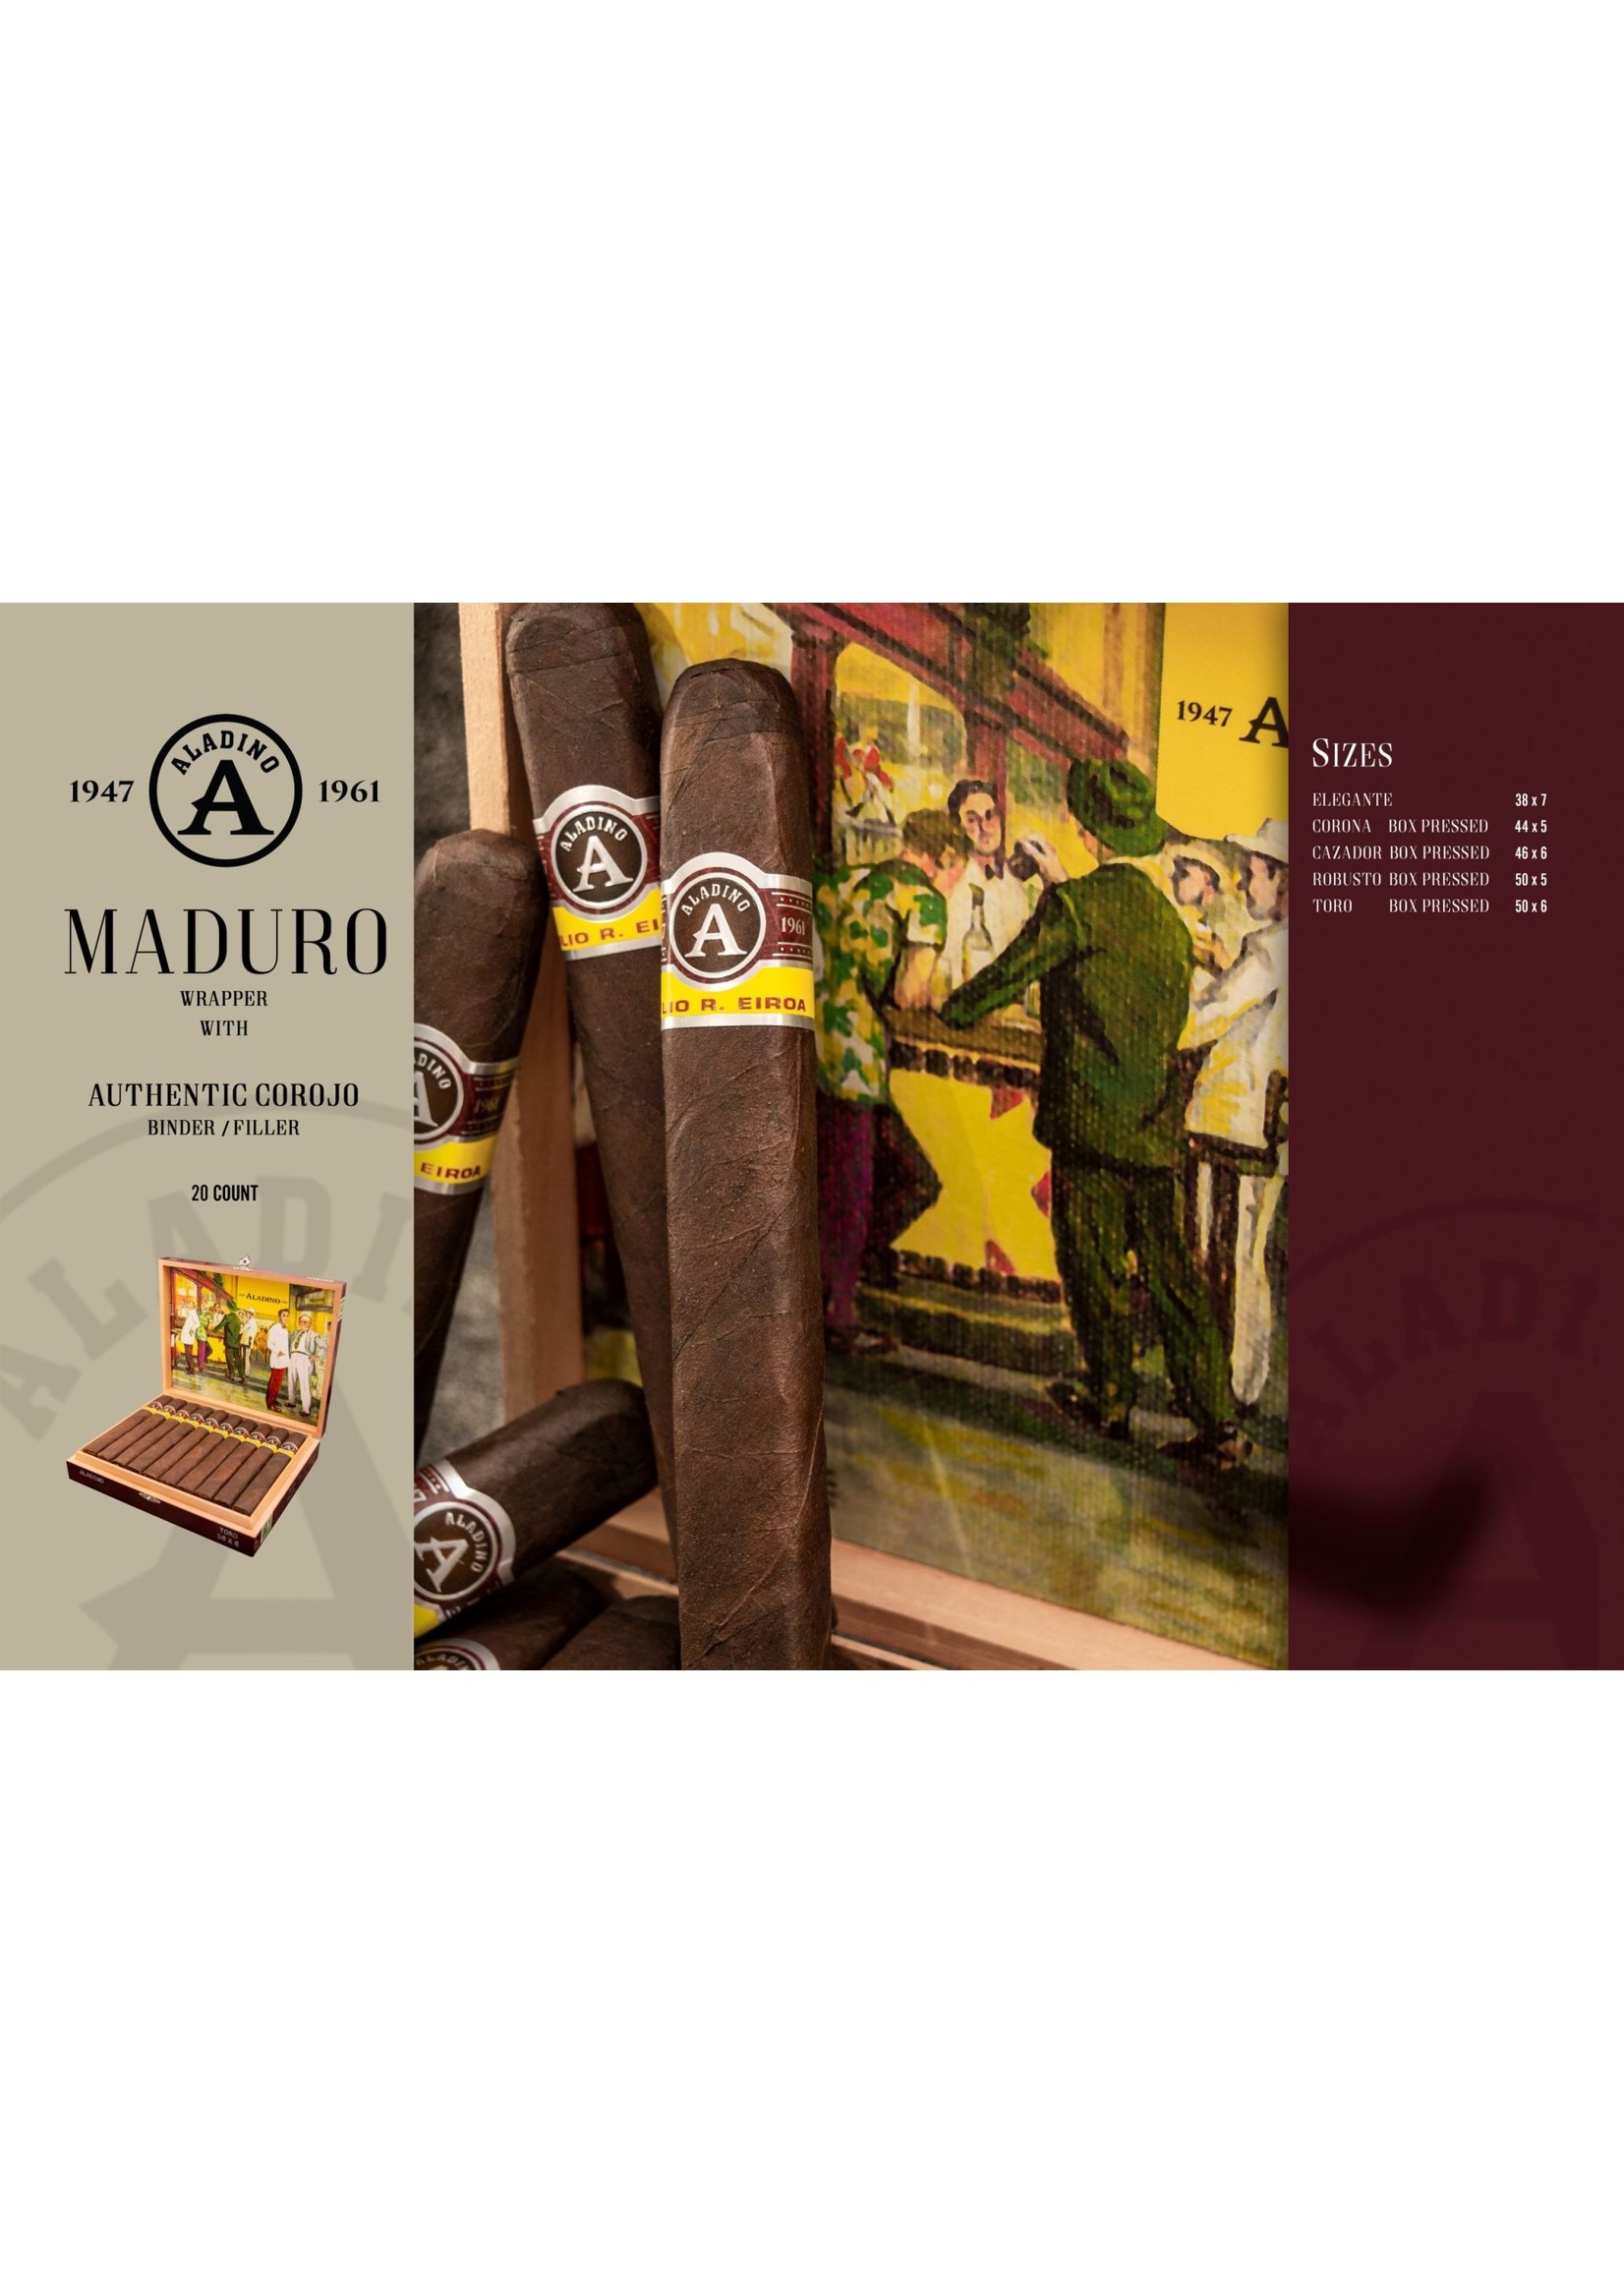 JRE Tobacco Co. Aladino Maduro Box Pressed - Toro - 6x50 single (C2)